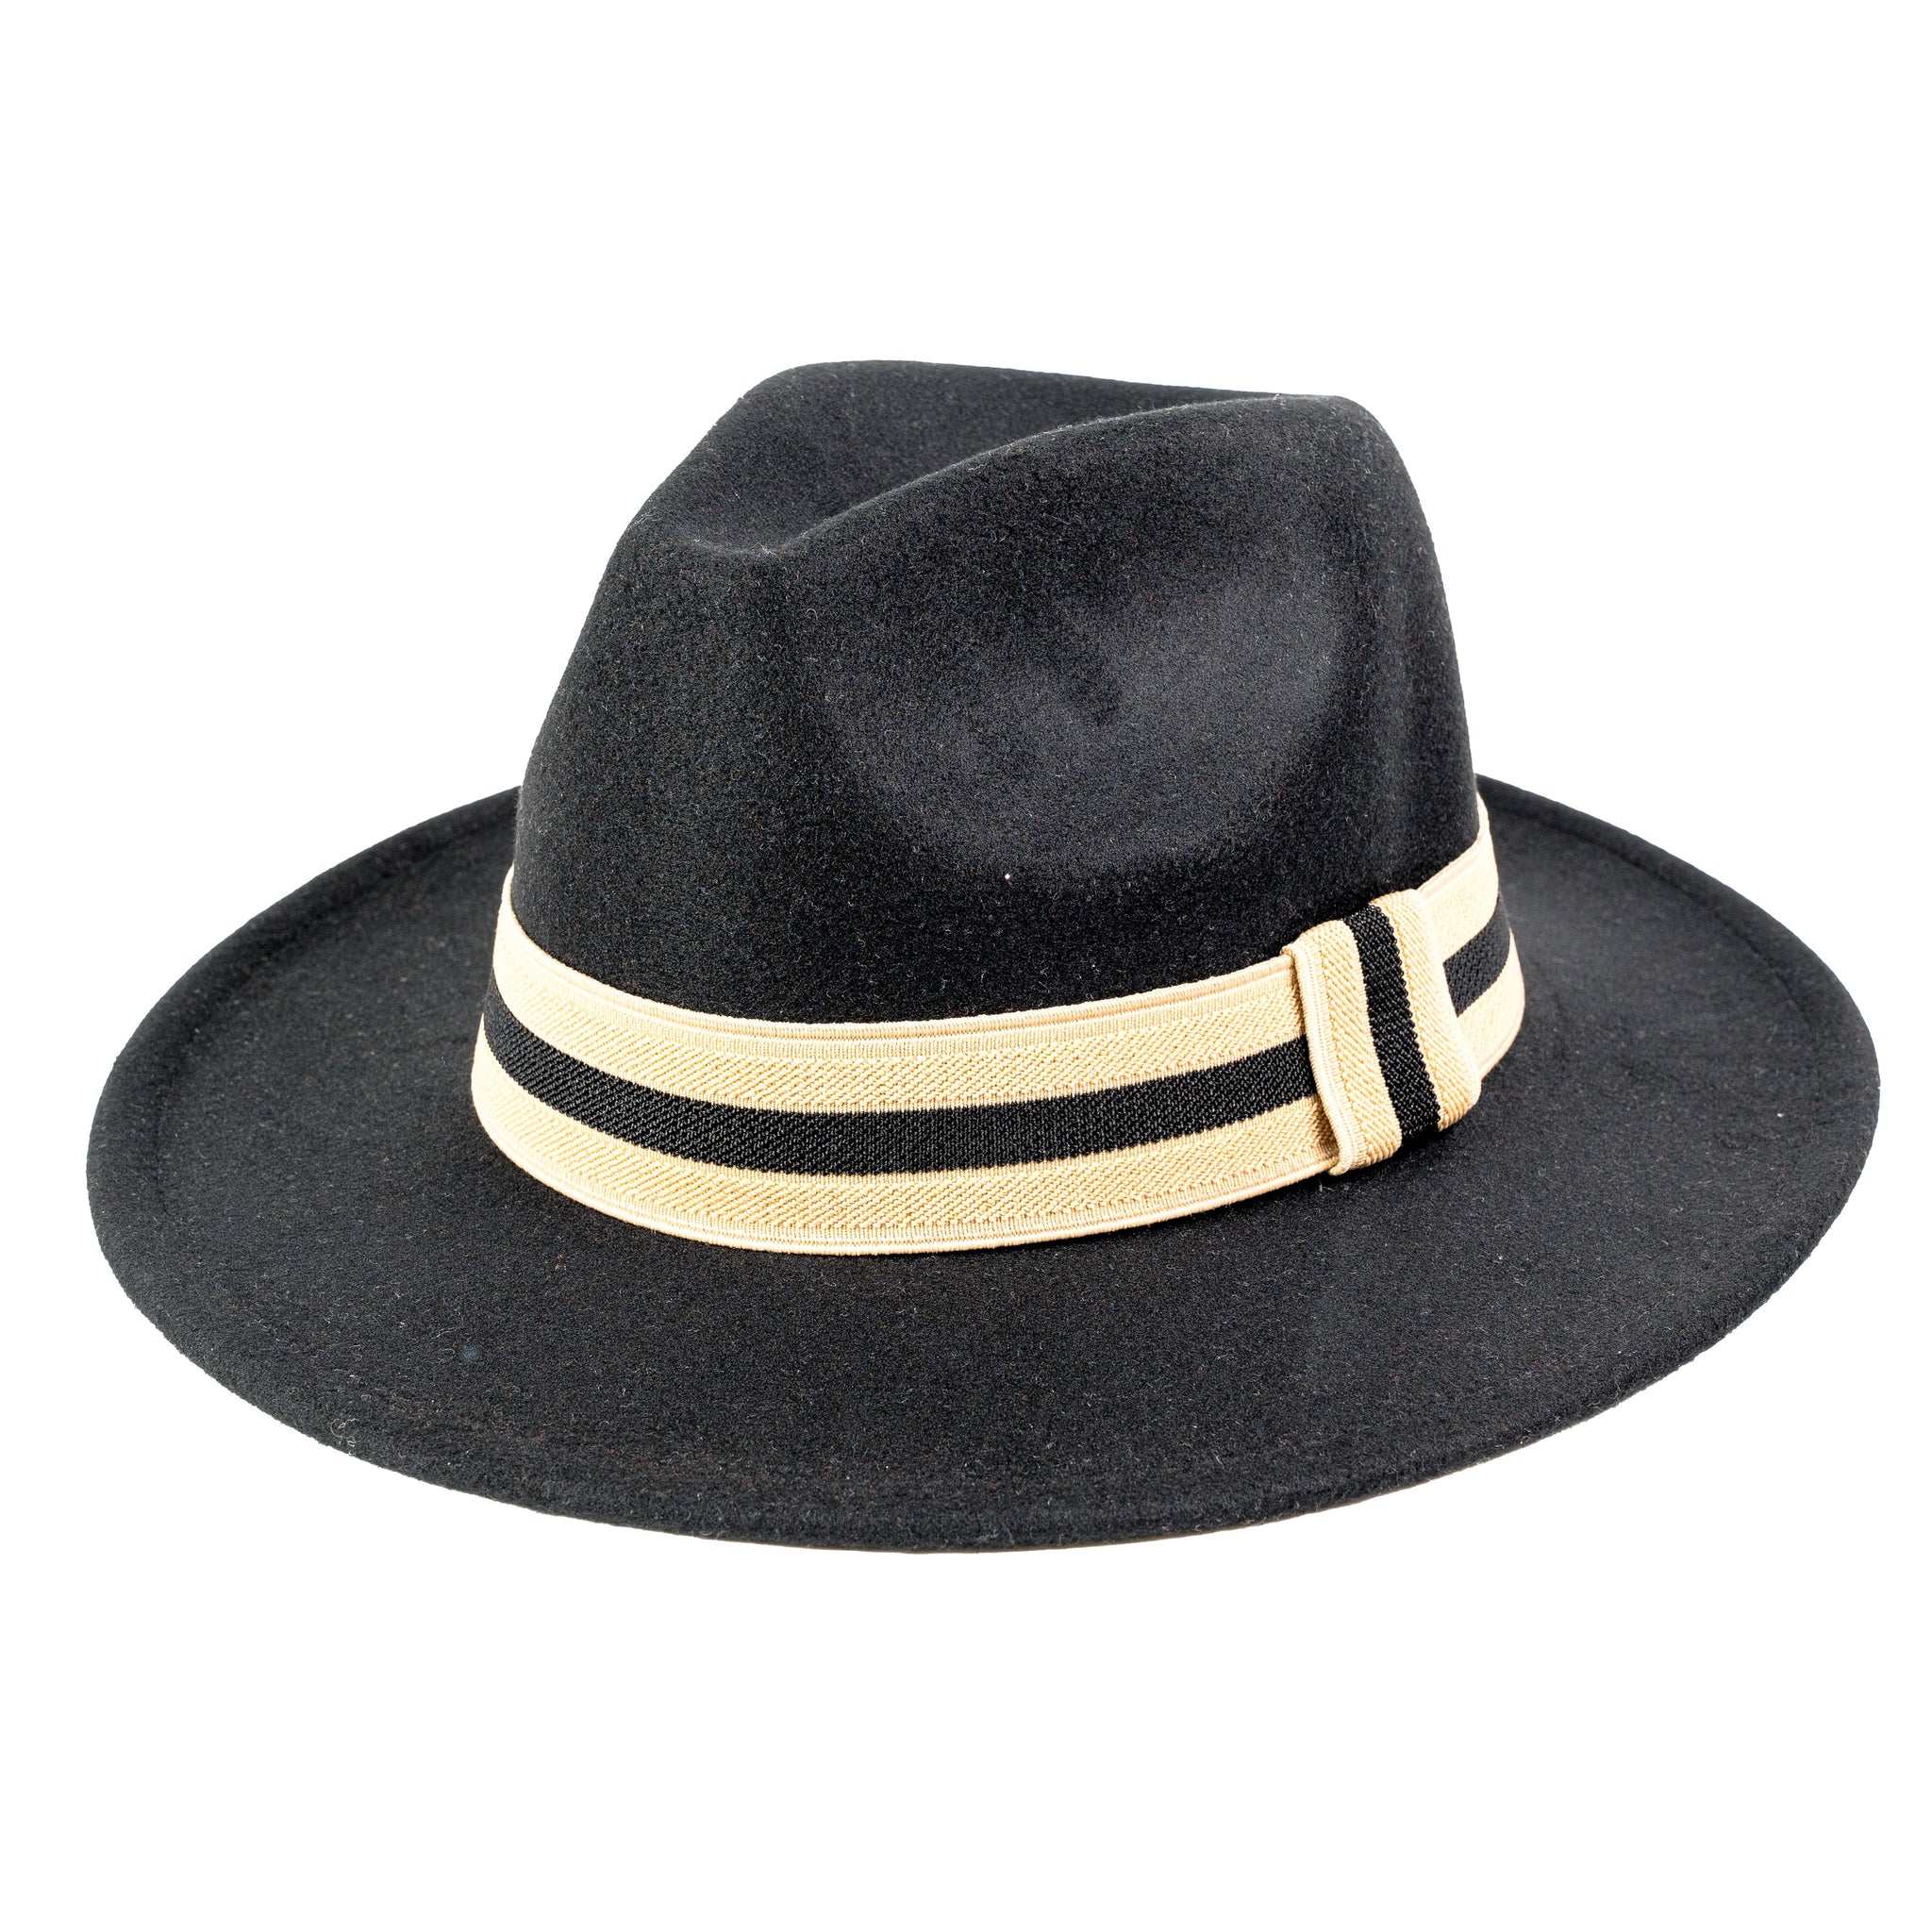 Chokore Pinched Crown Fedora Hat with Elastic Band (Black)